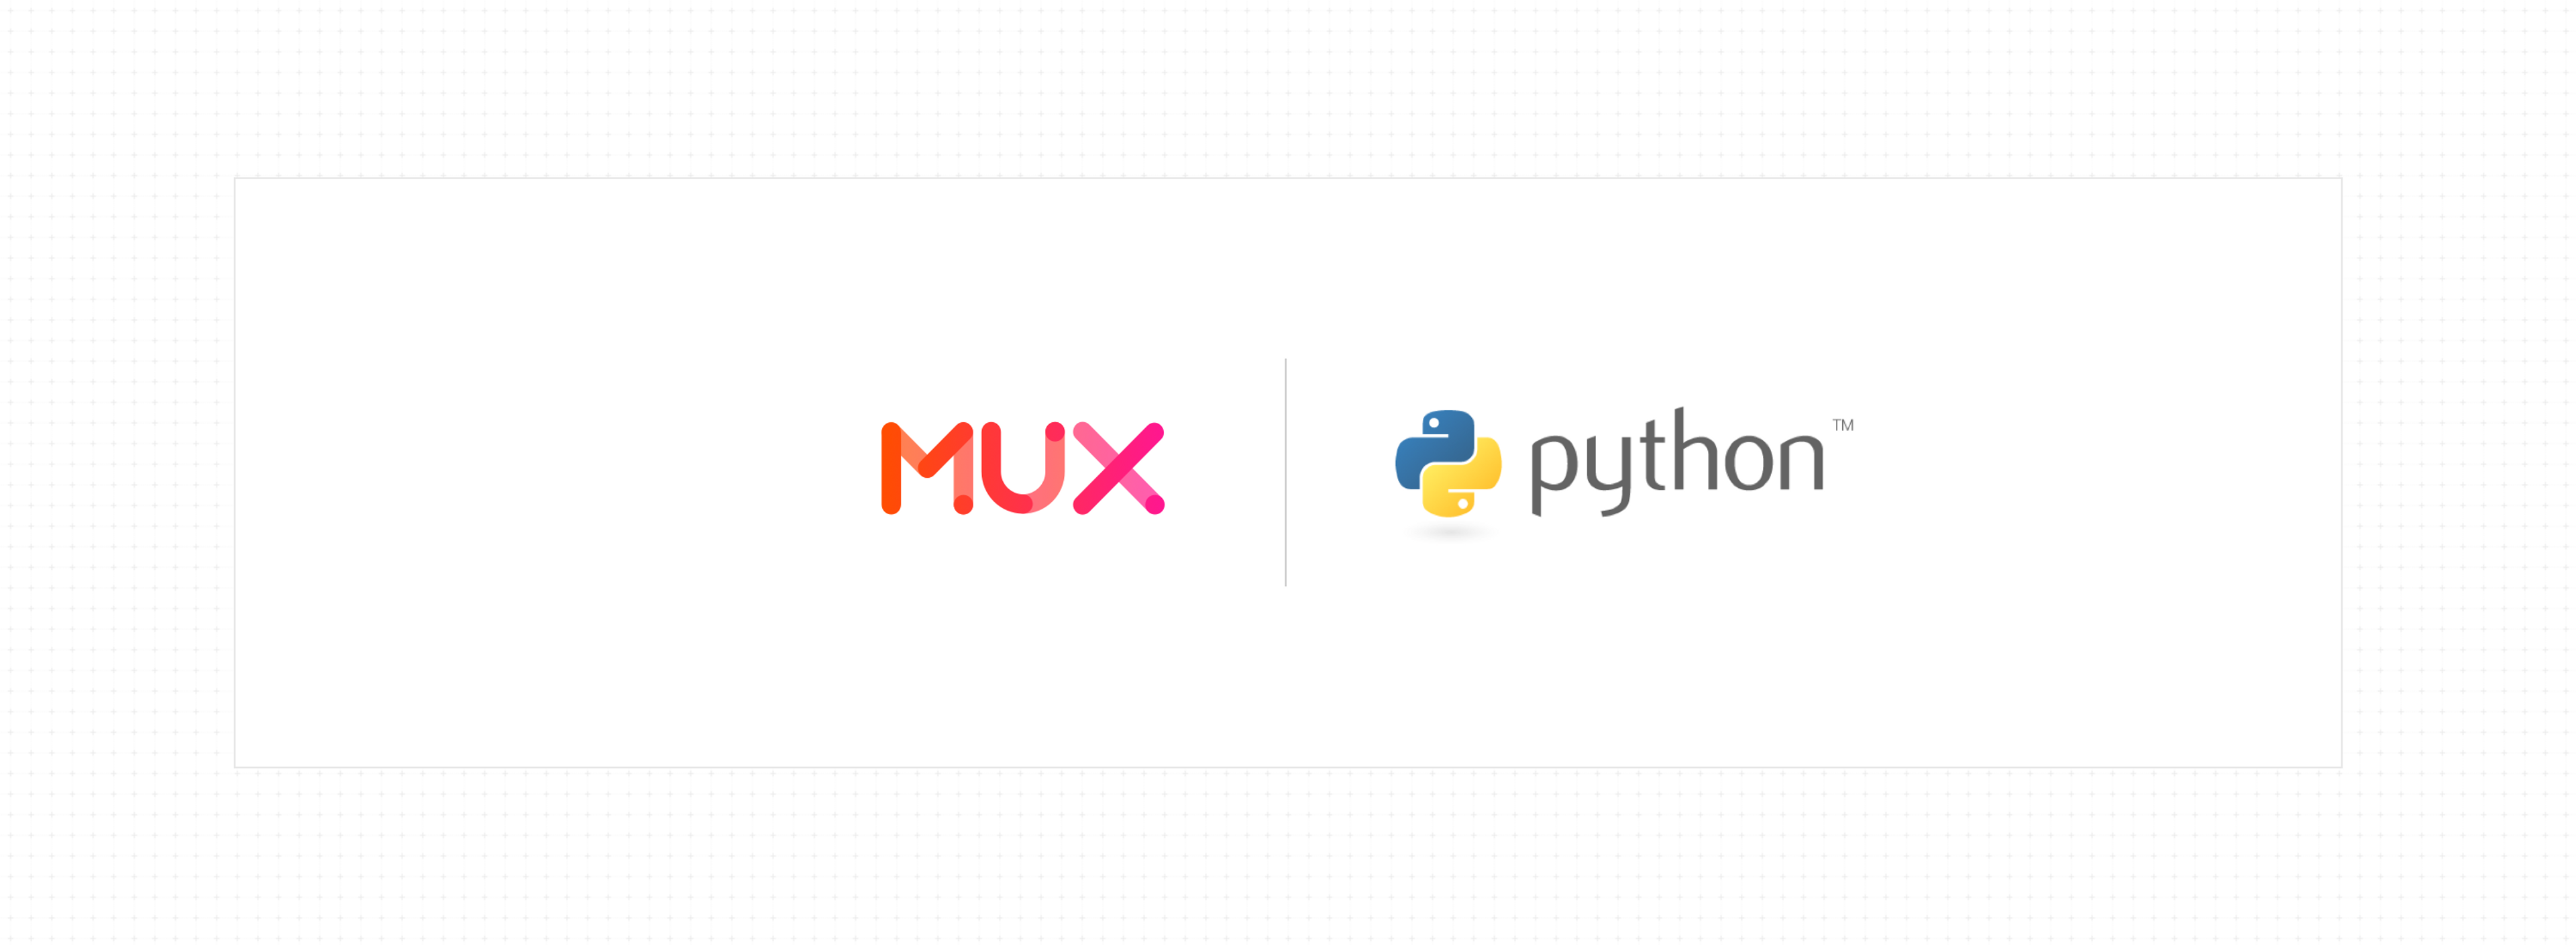 Introducing Mux Python